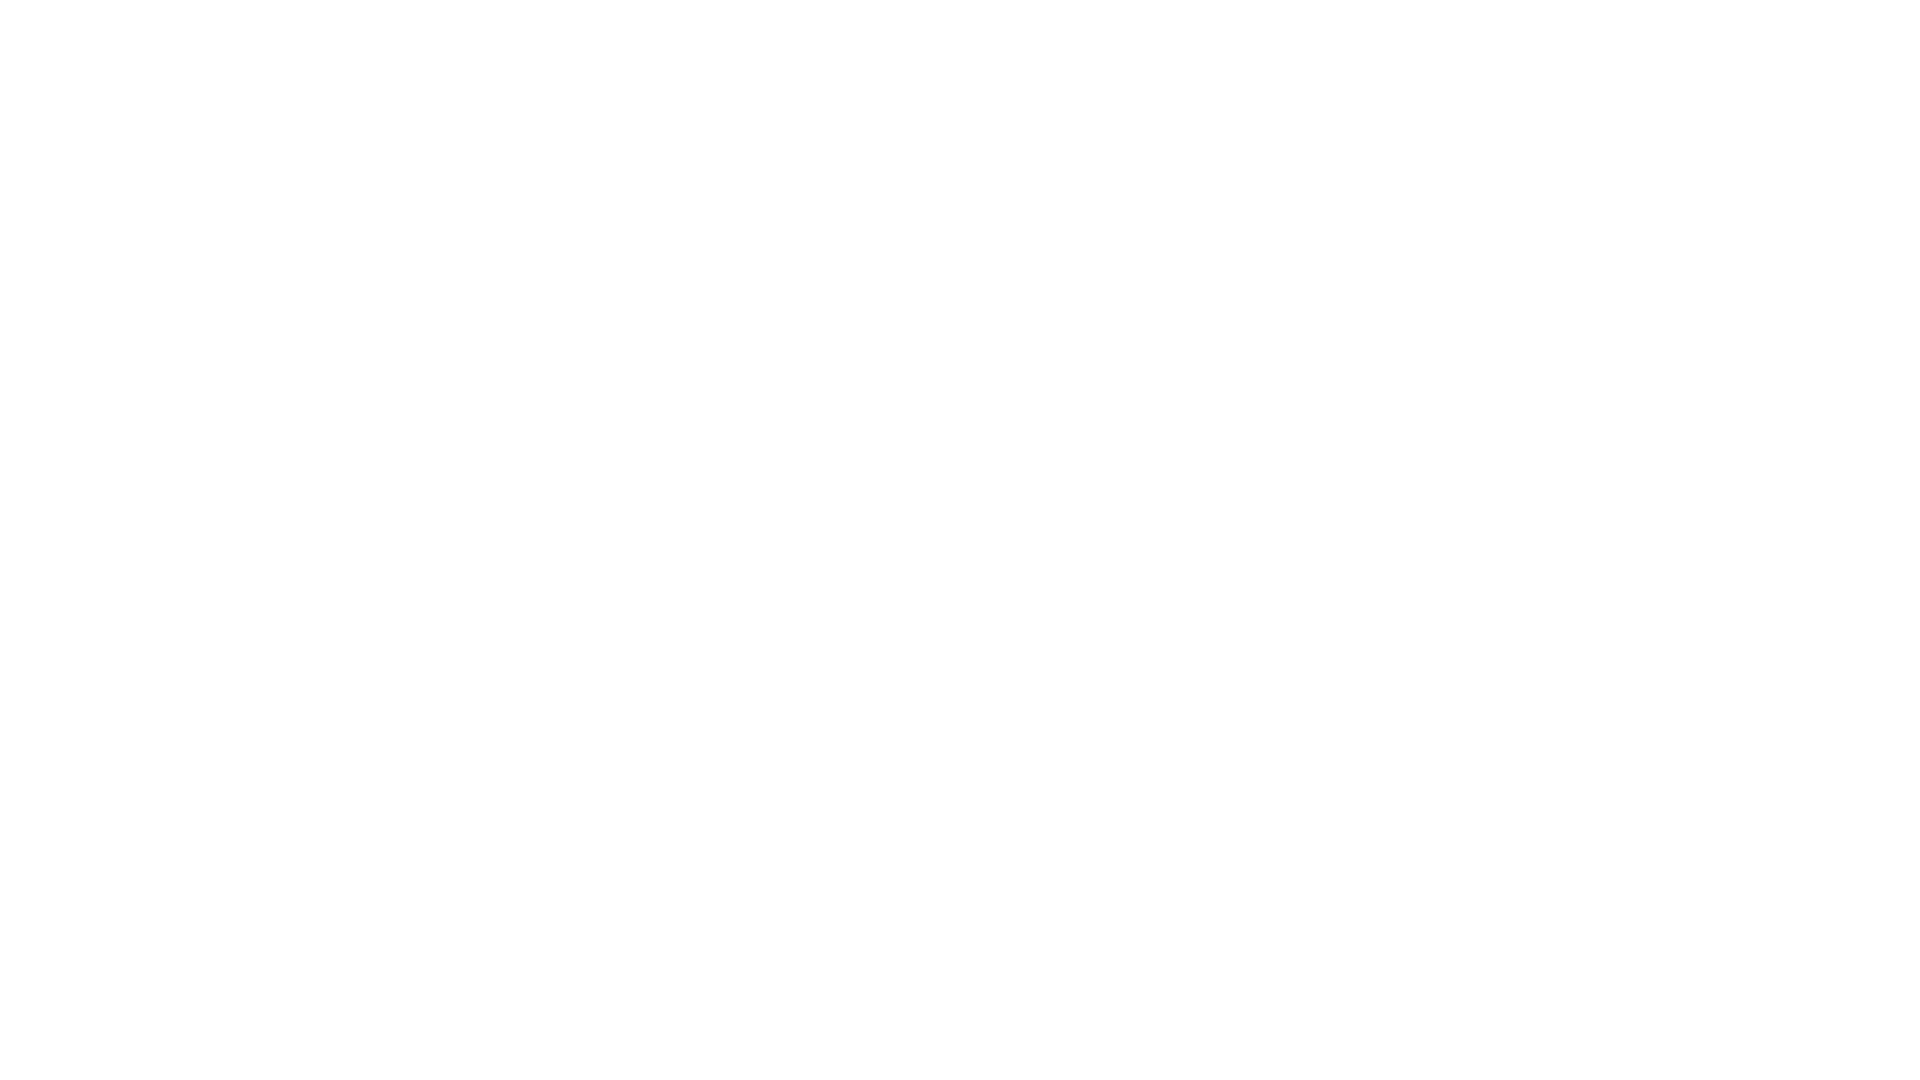 Teeth Bonding